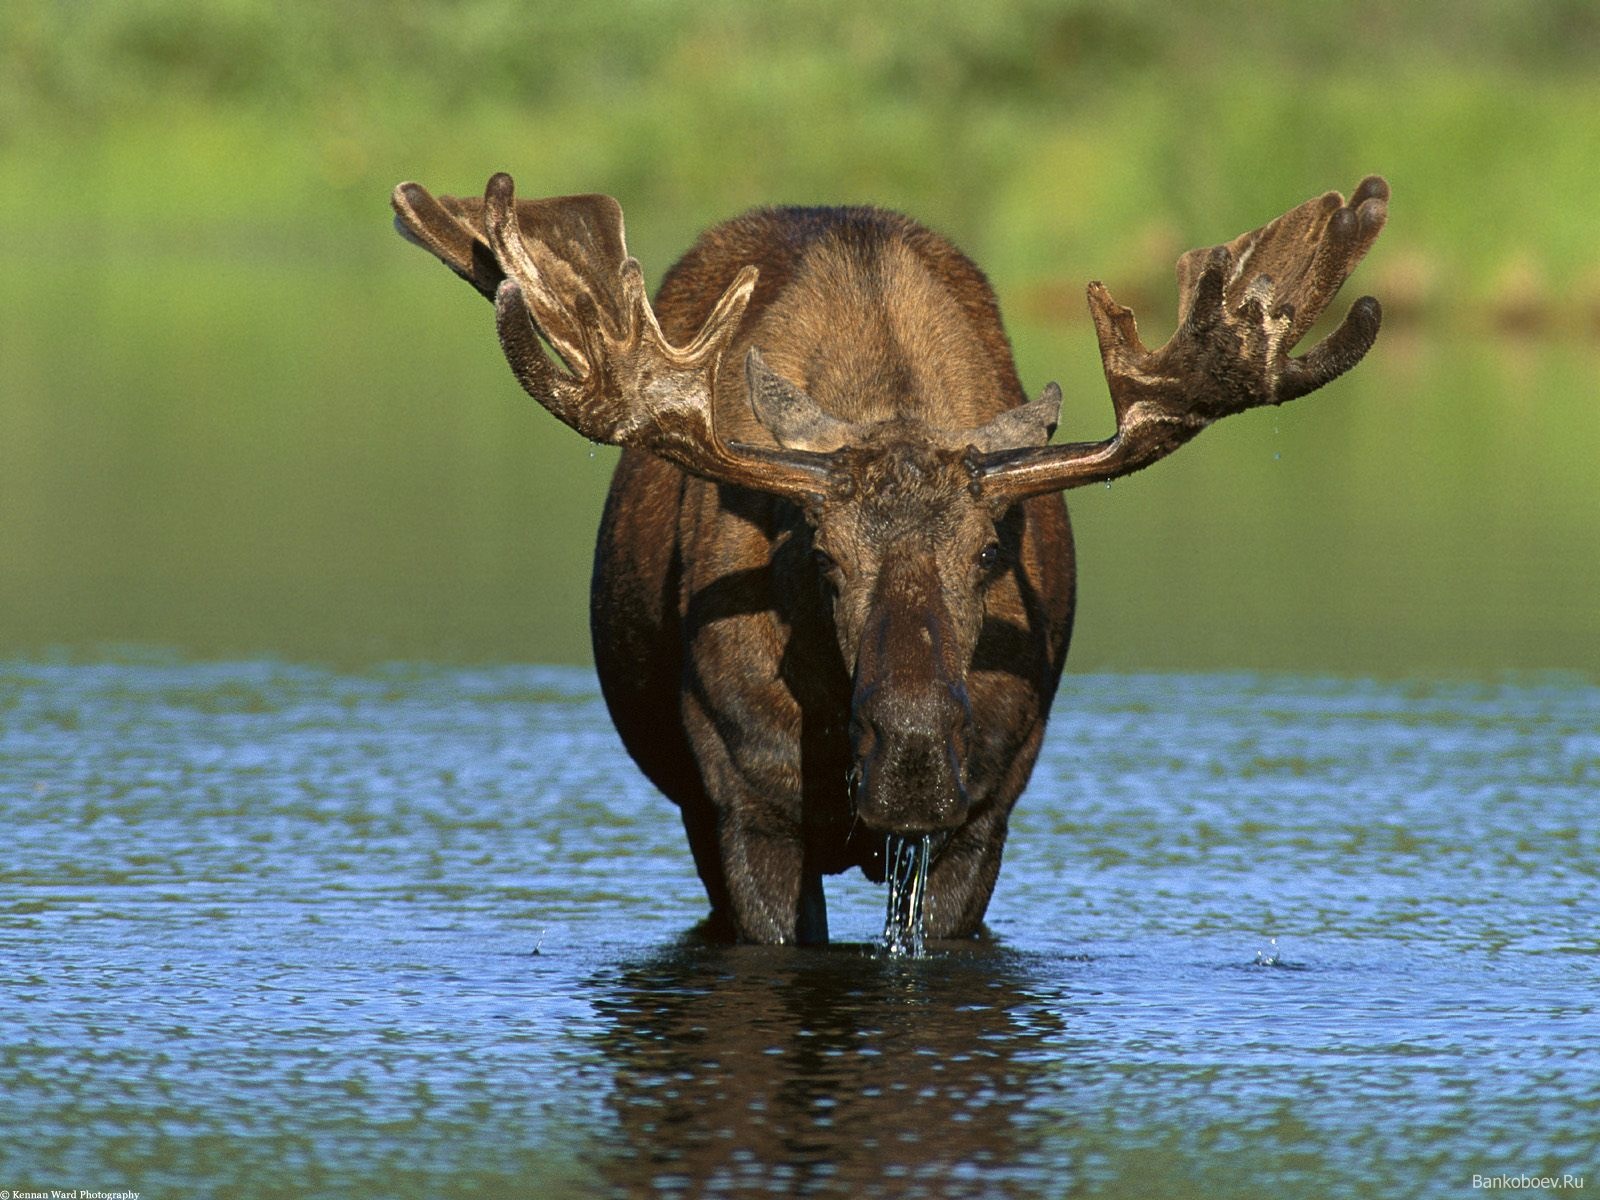 Water elk